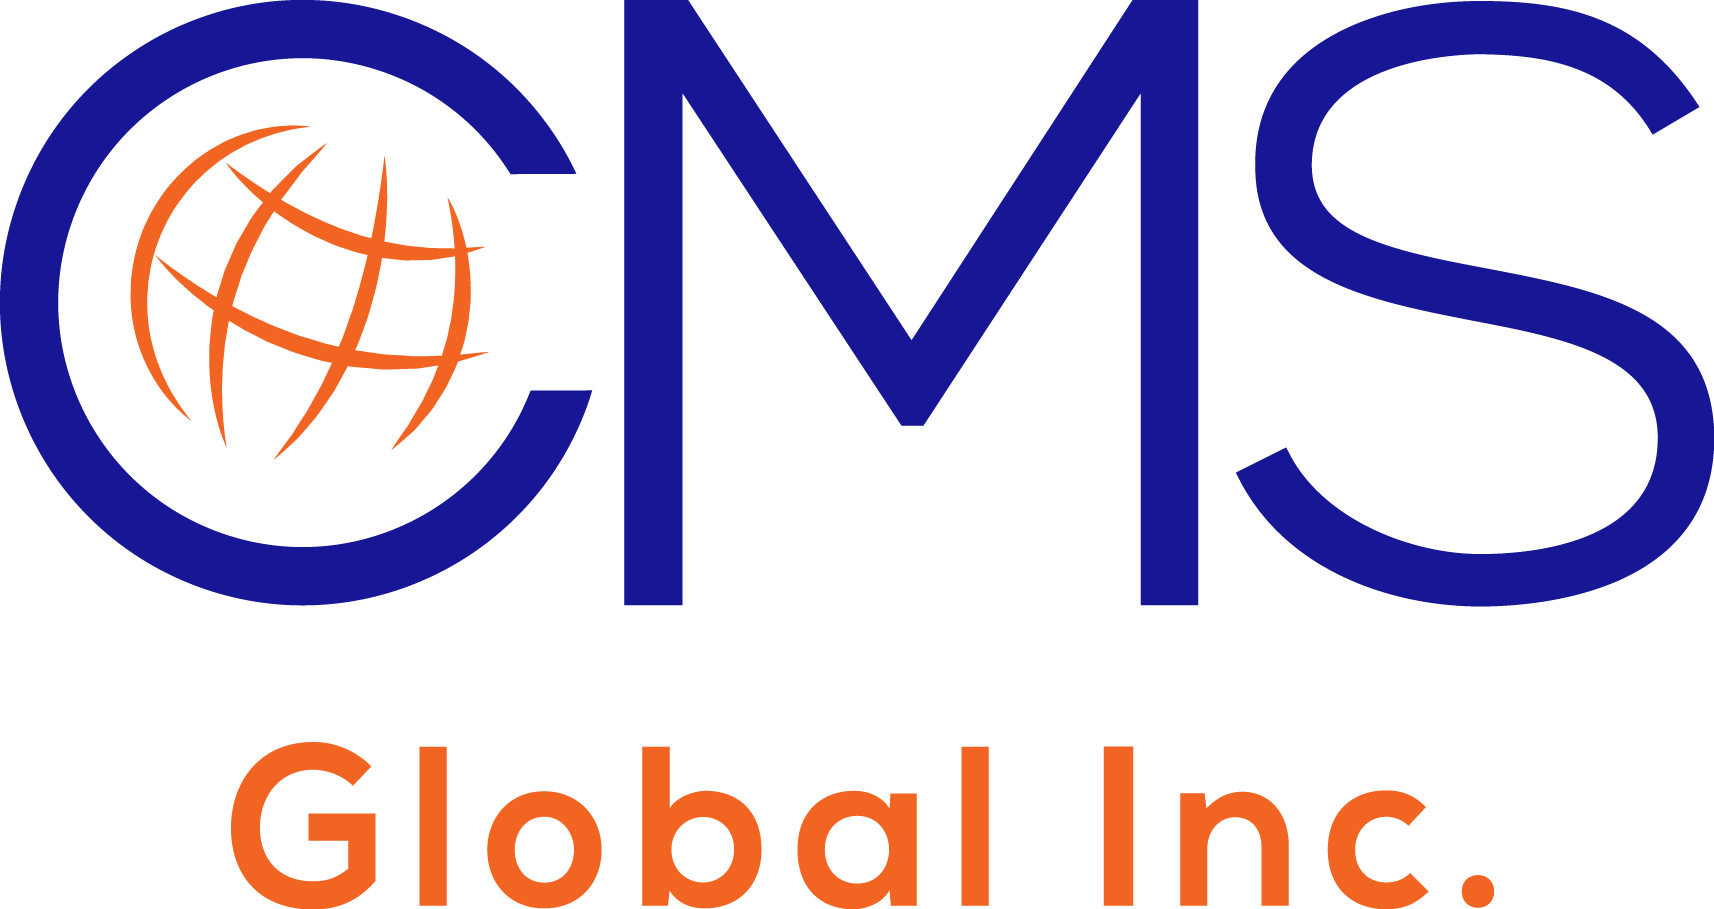 CMS Global logo